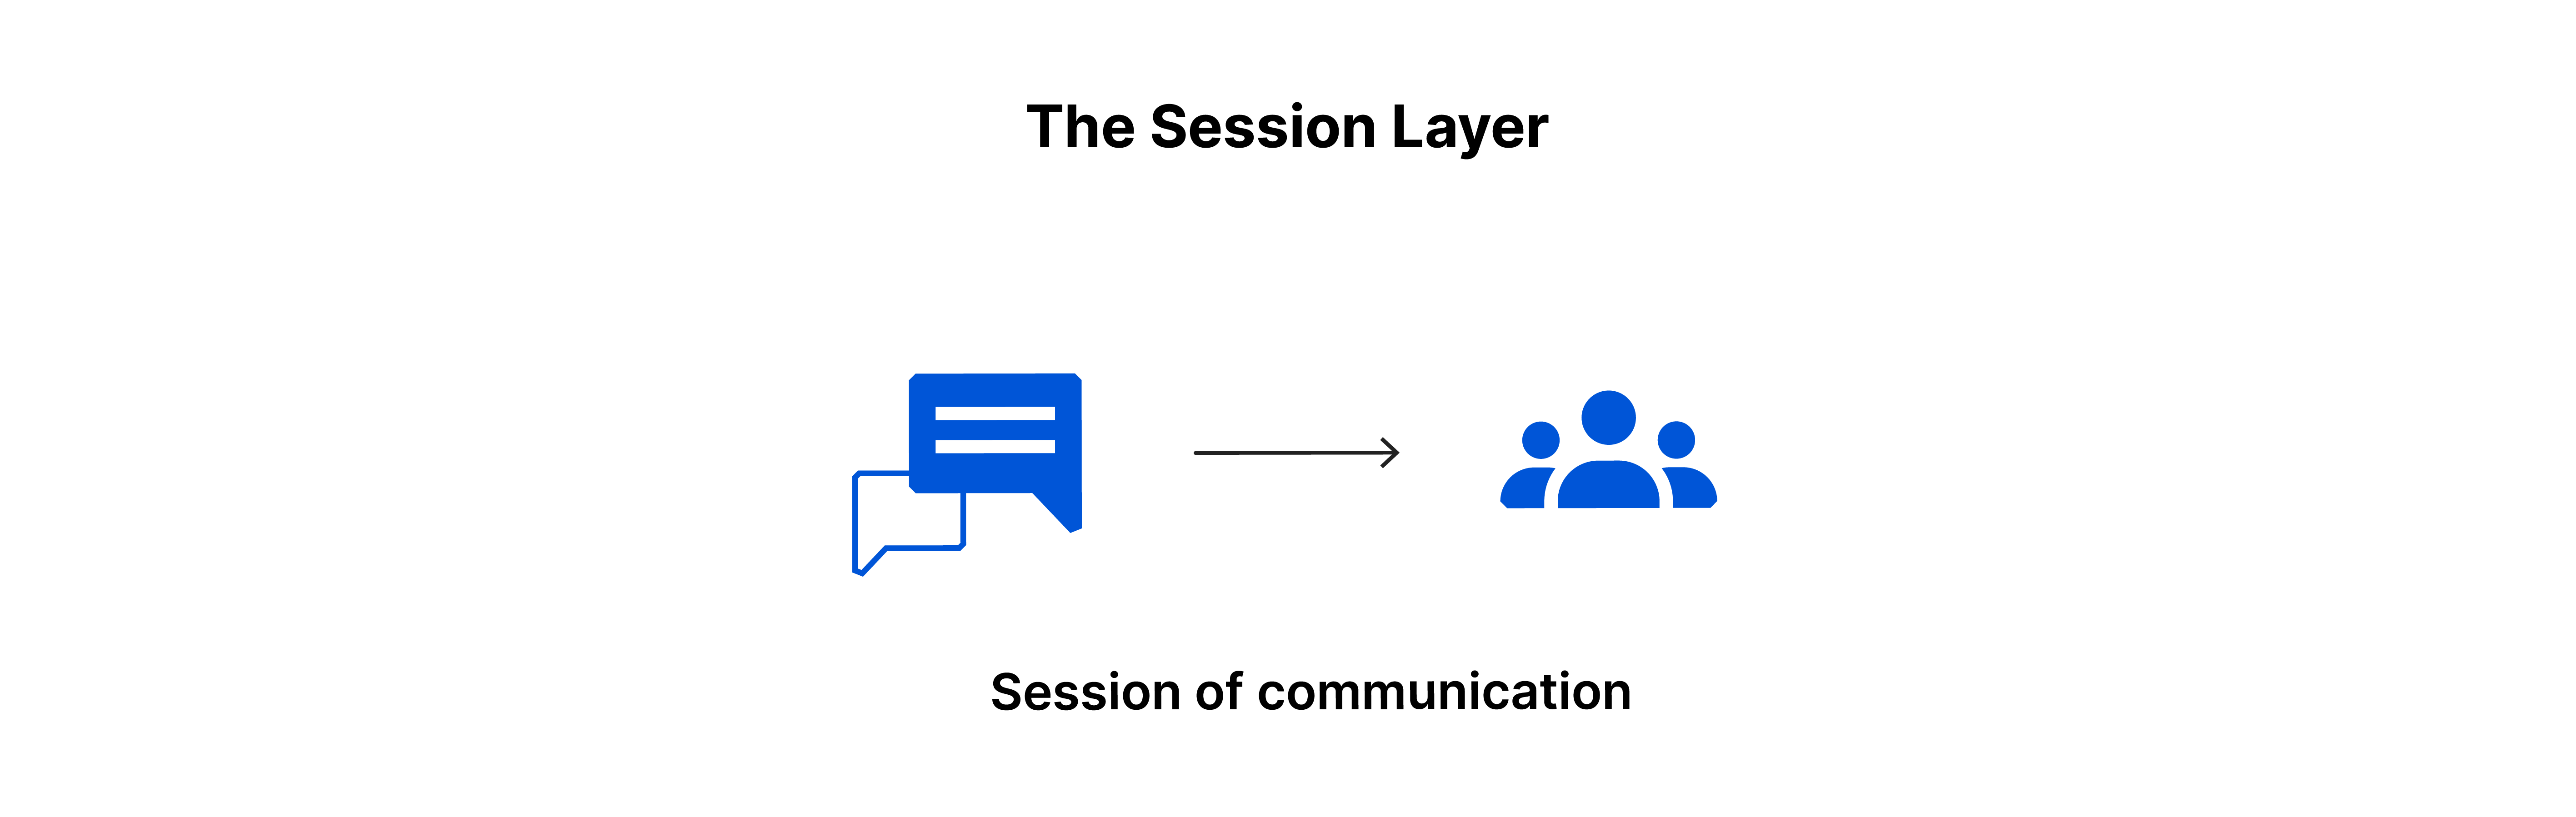 La capa de sesión: sesión de comunicación